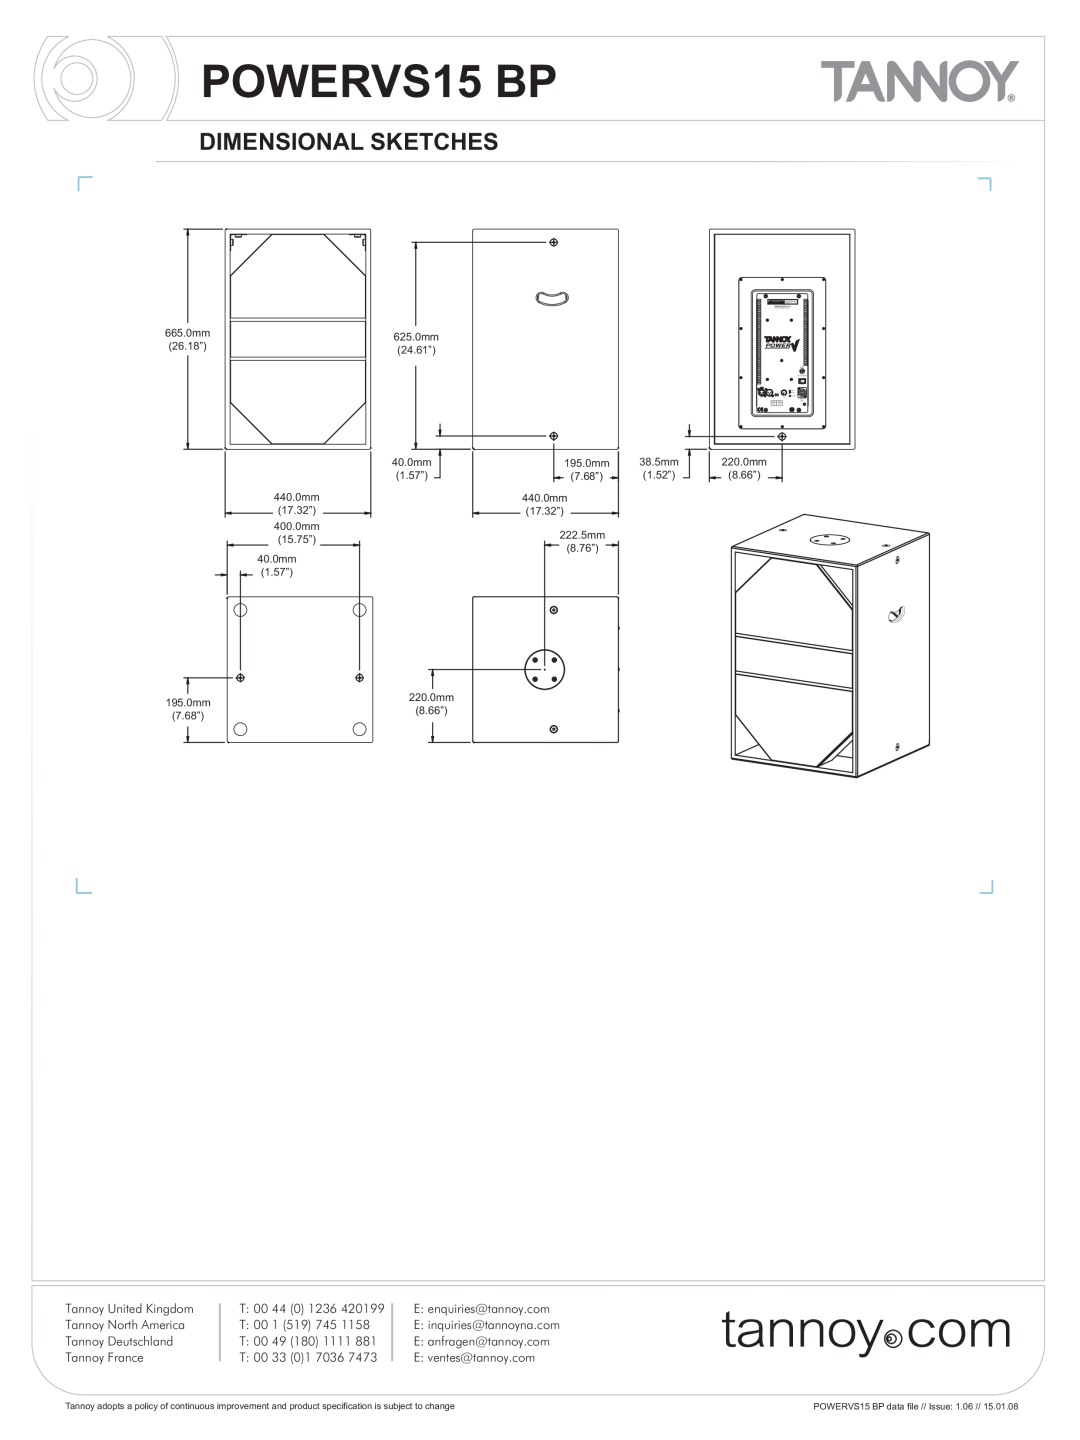 Tannoy manual Dimensional Sketches, POWERVS15 BP 